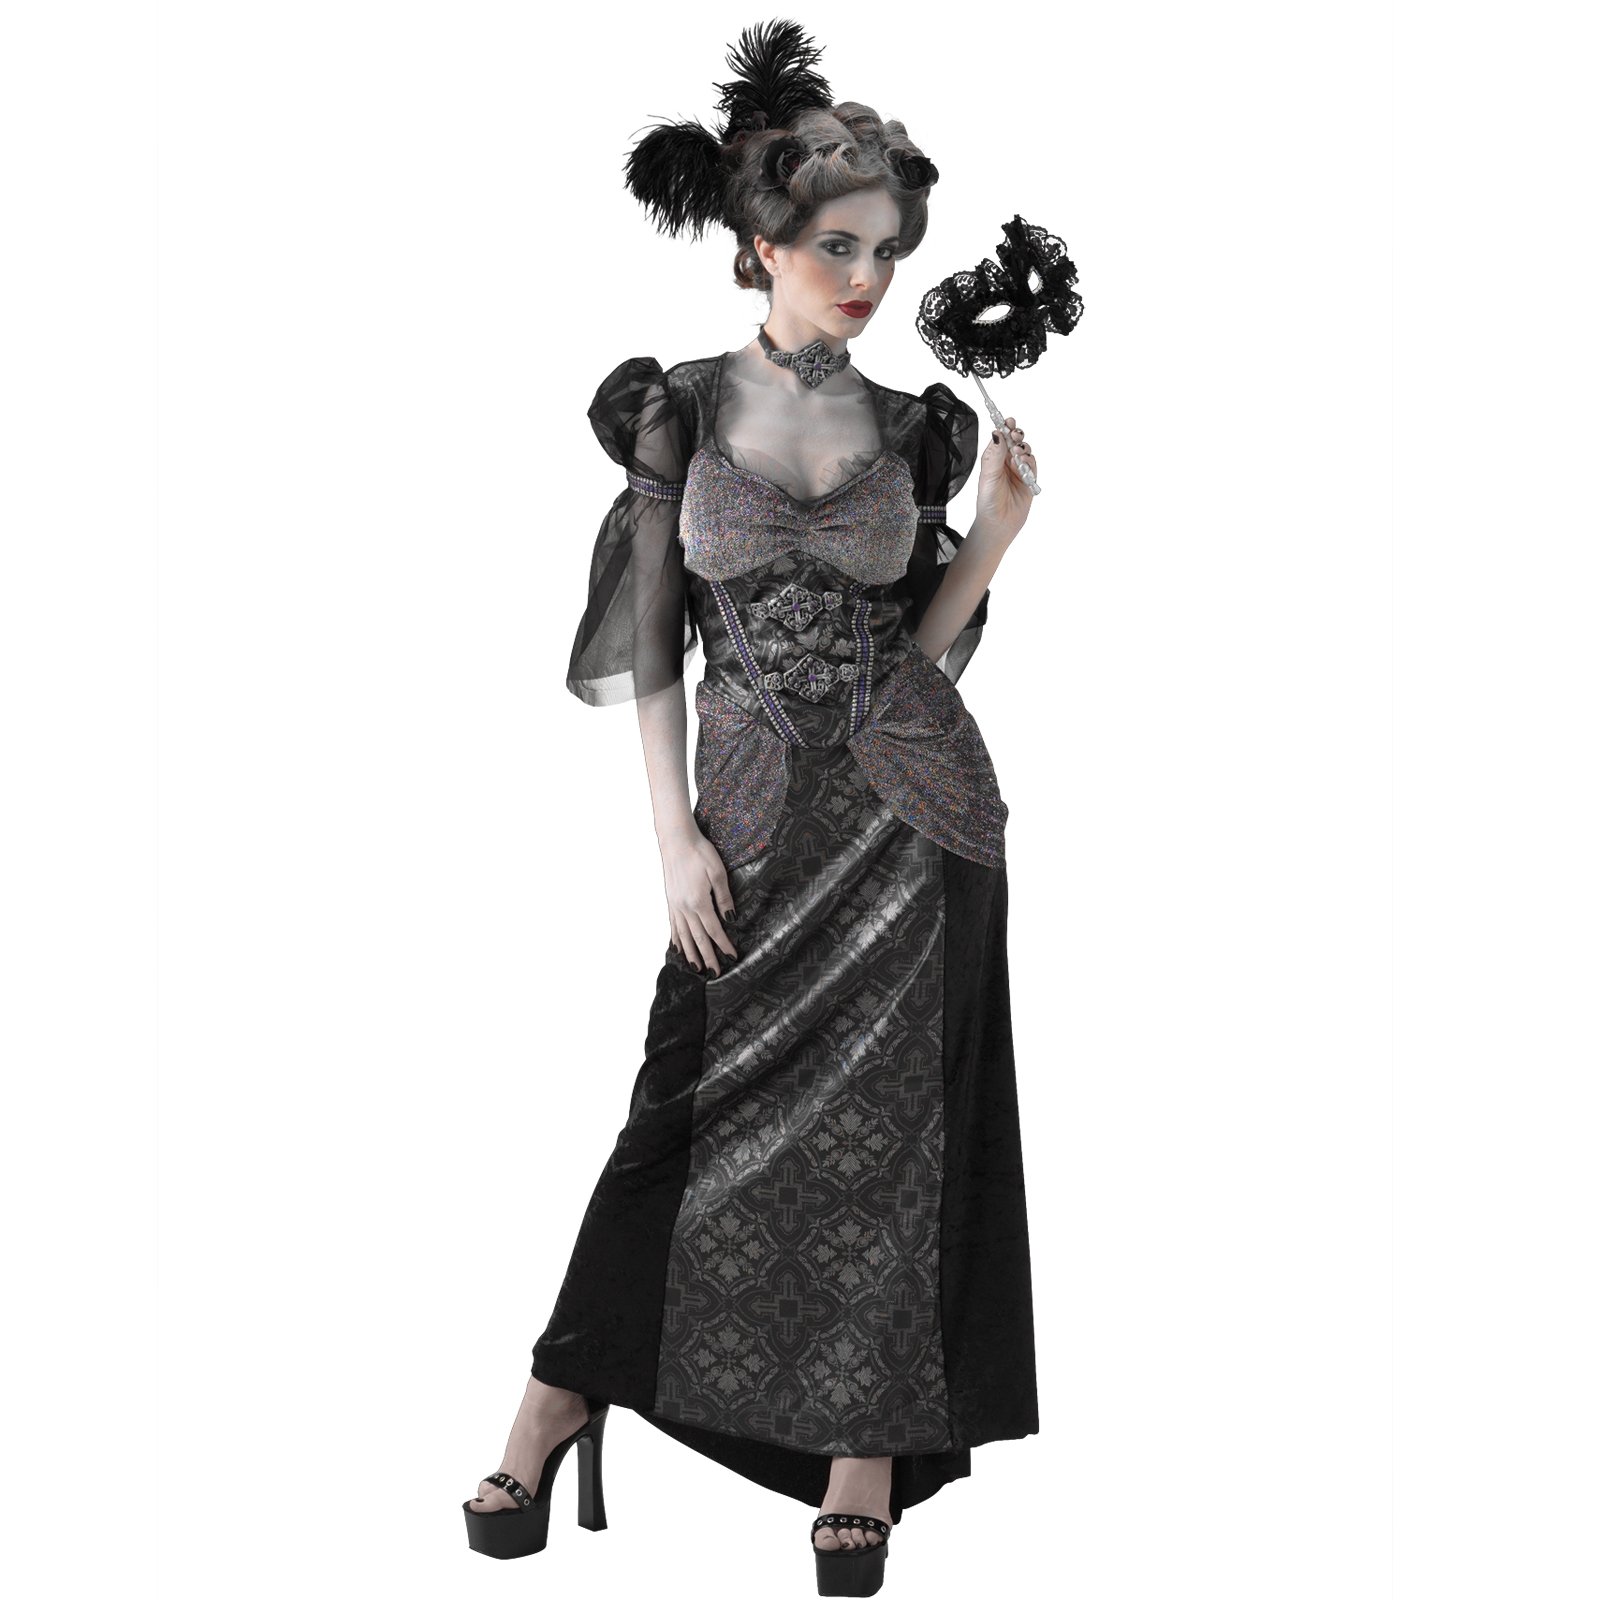 Masquerade Ball Countess Adult Costume